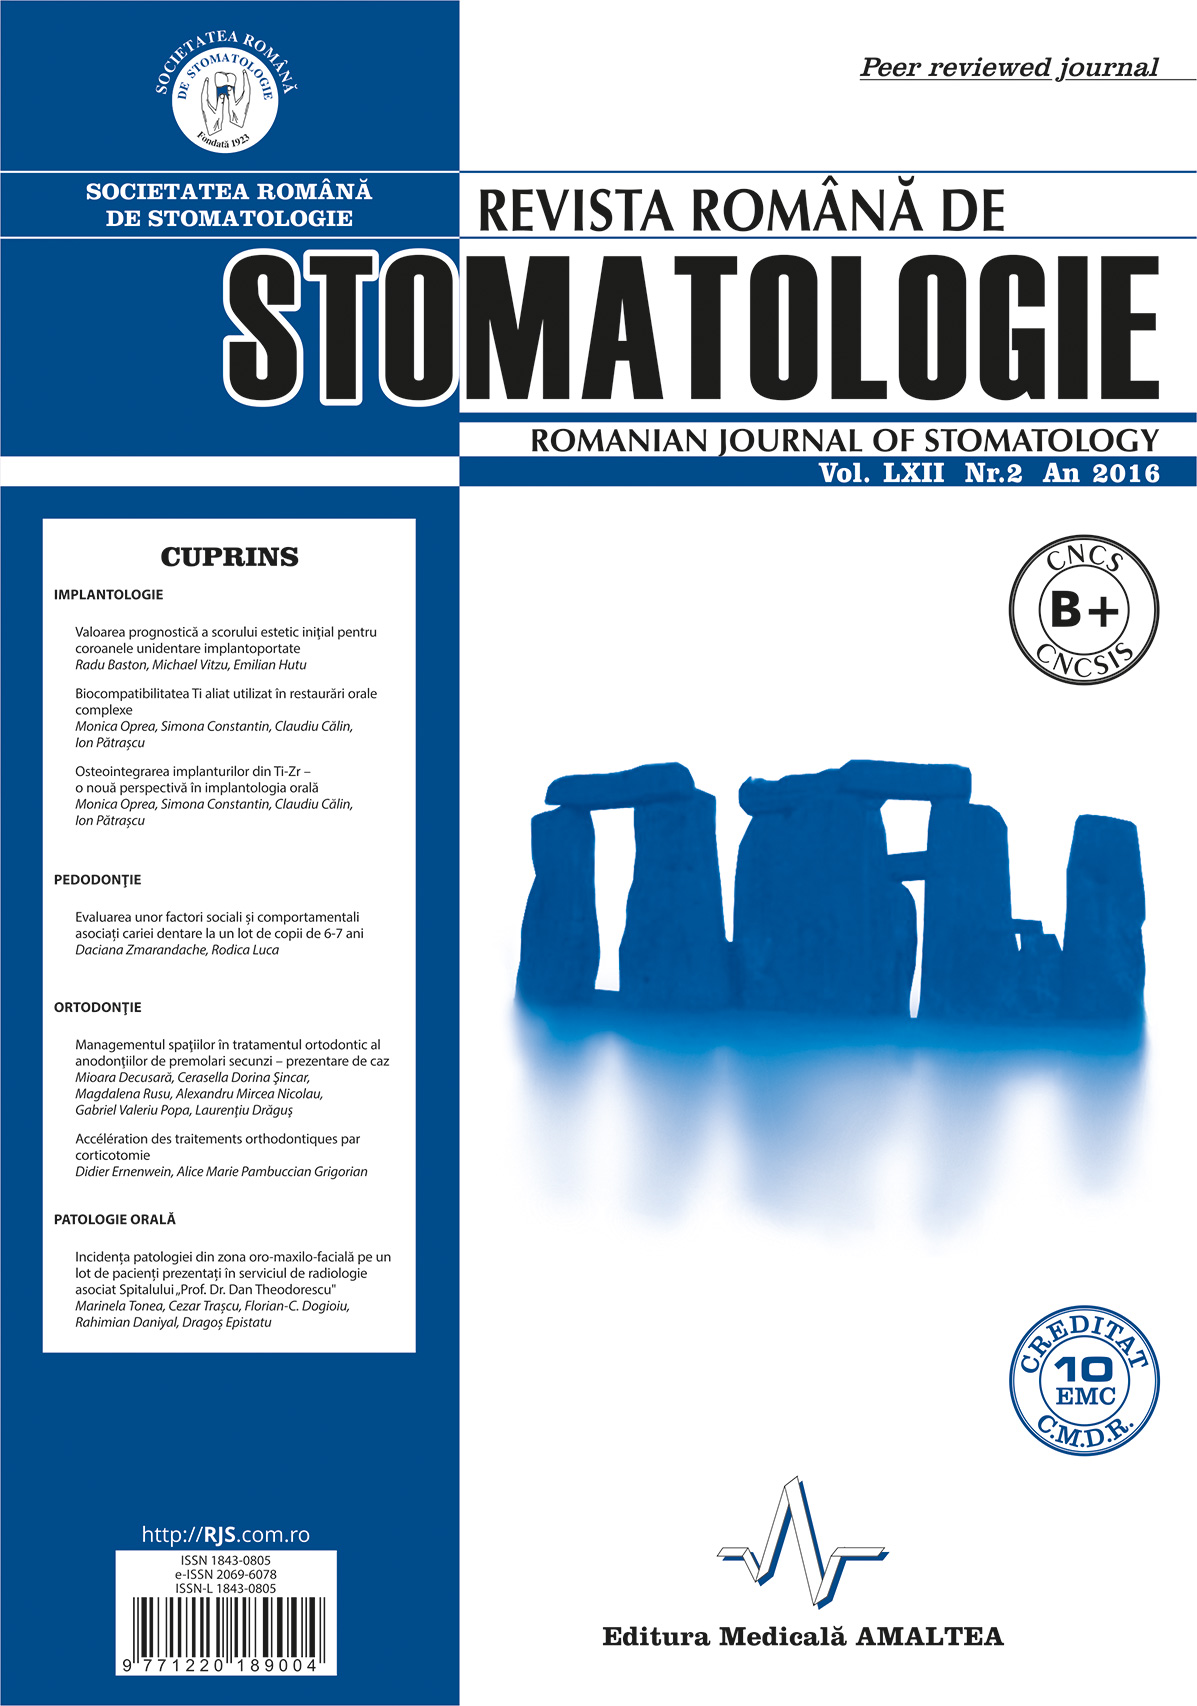 Revista Romana de STOMATOLOGIE - Romanian Journal of Stomatology, Vol. LXII, Nr. 2, An 2016